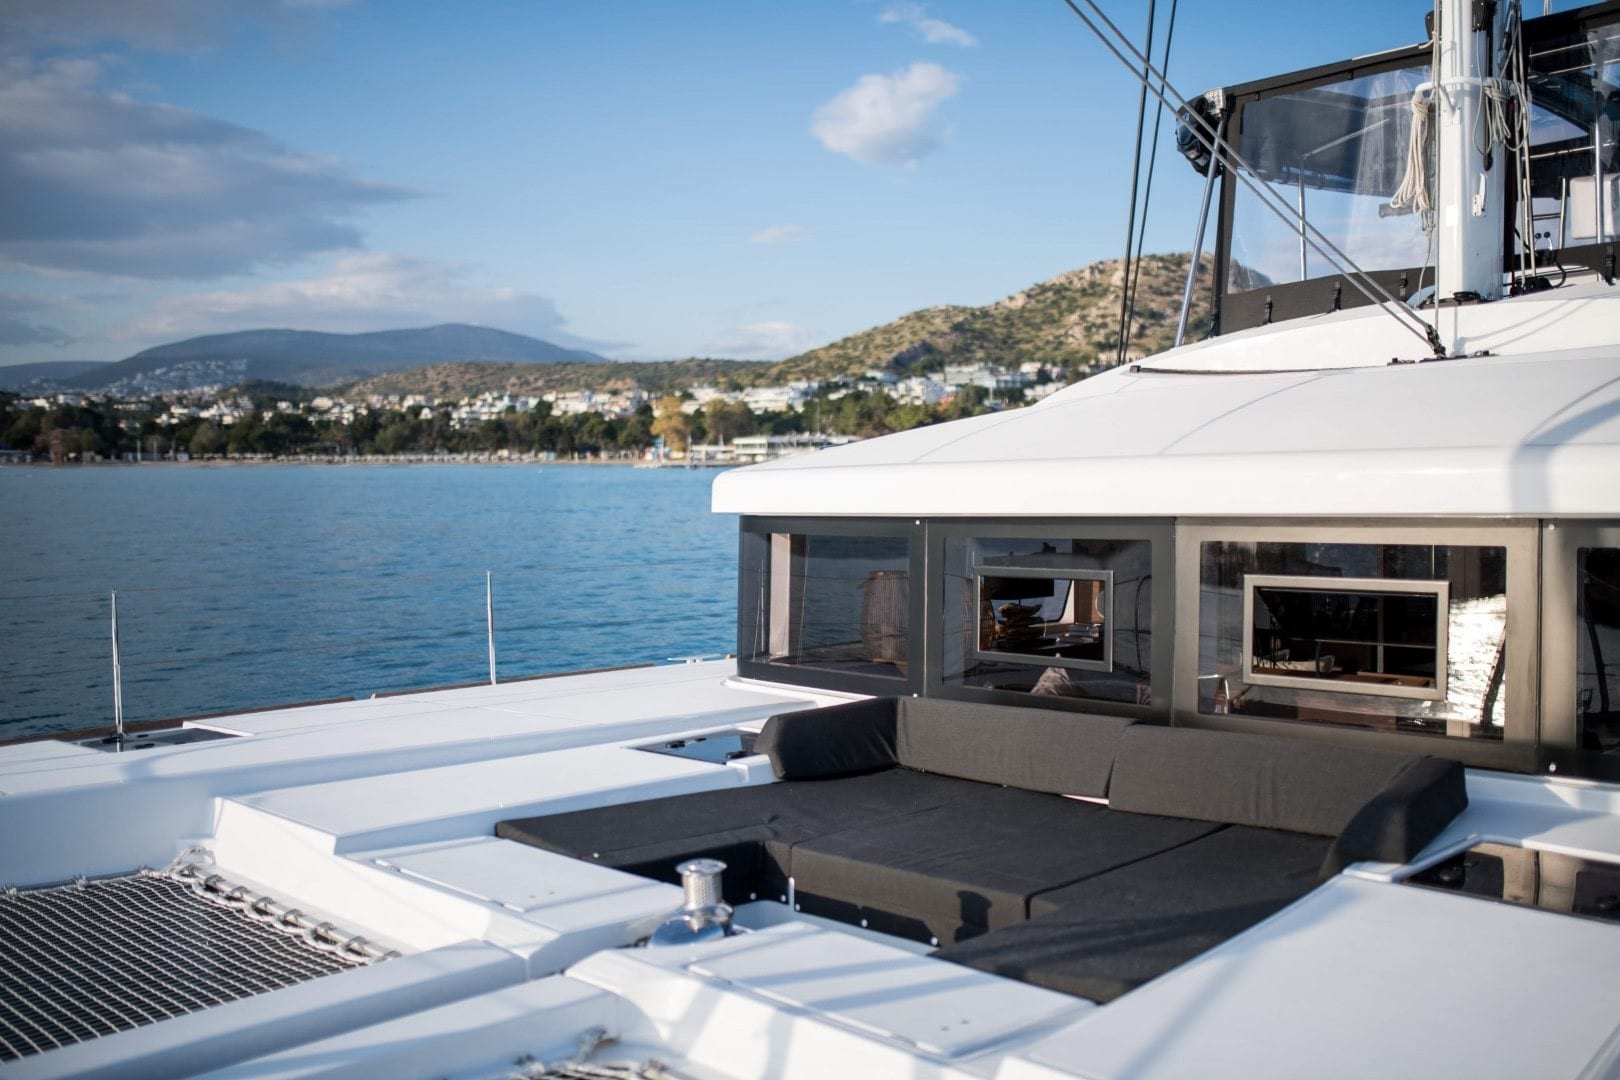 fore lounge of catamaran yacht